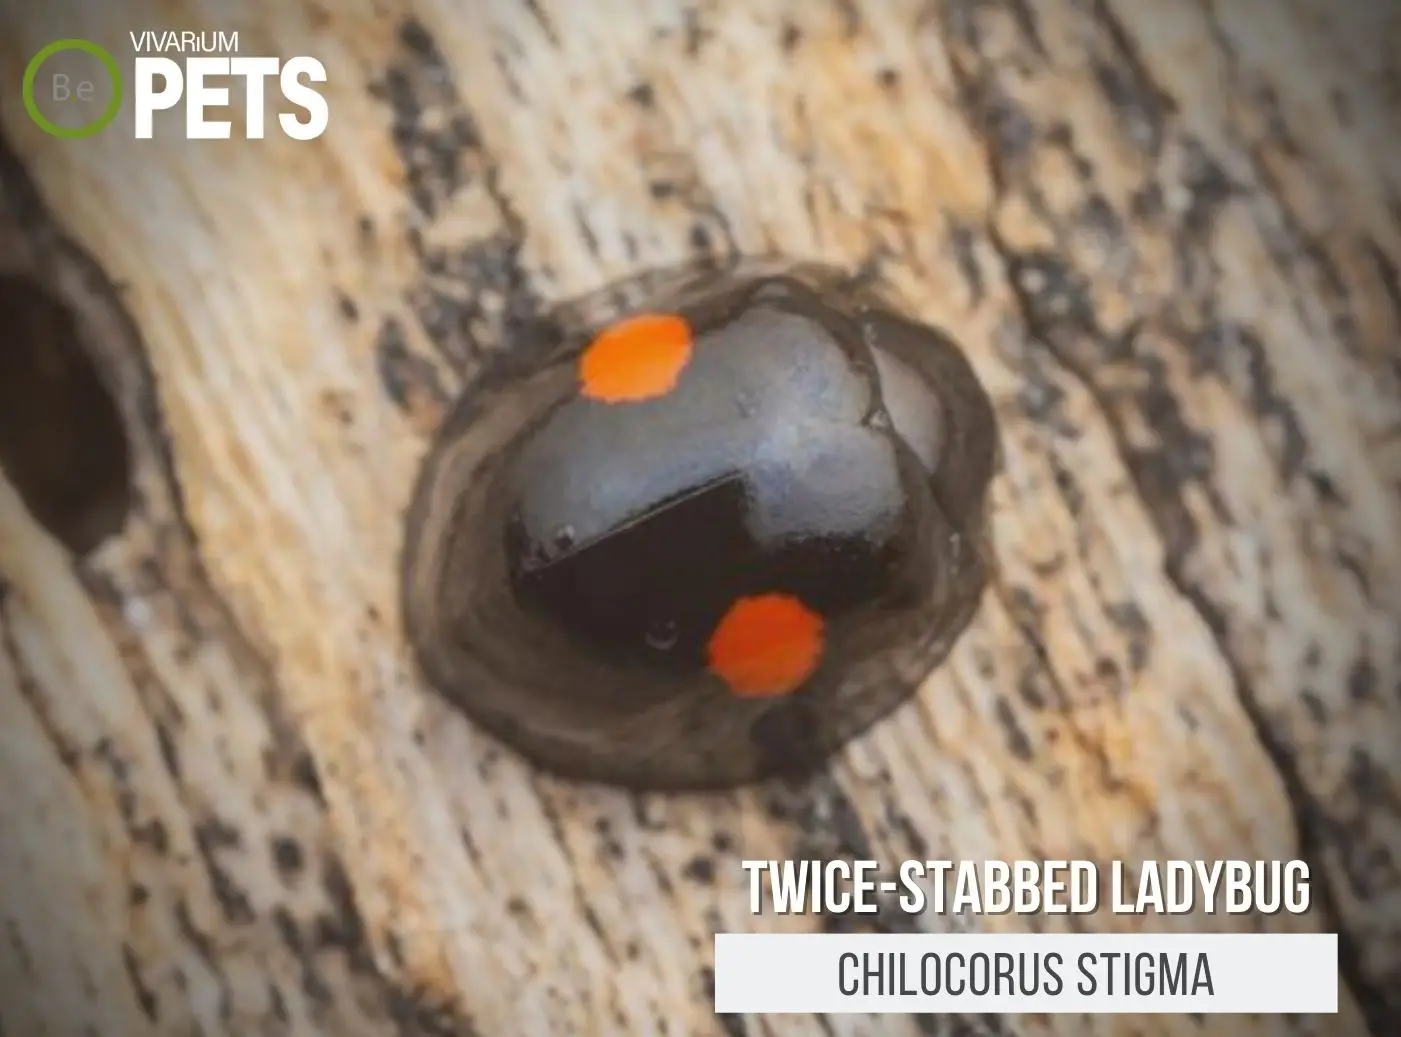 Chilocorus stigma: The Twice-stabbed Ladybug Care Guide!